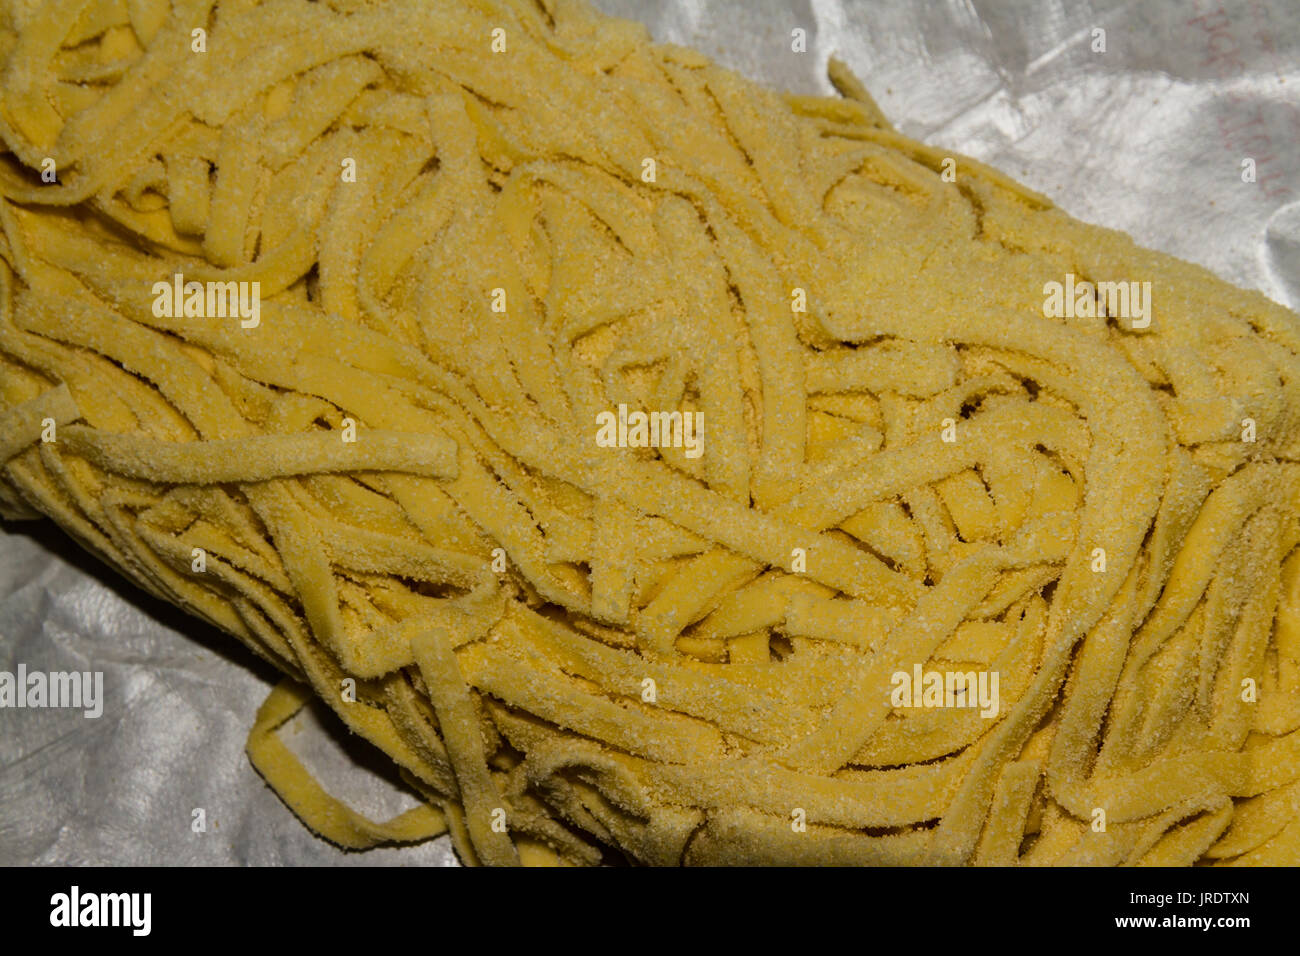 Freshly made tagliatelli pasta dusted with semolina Stock Photo